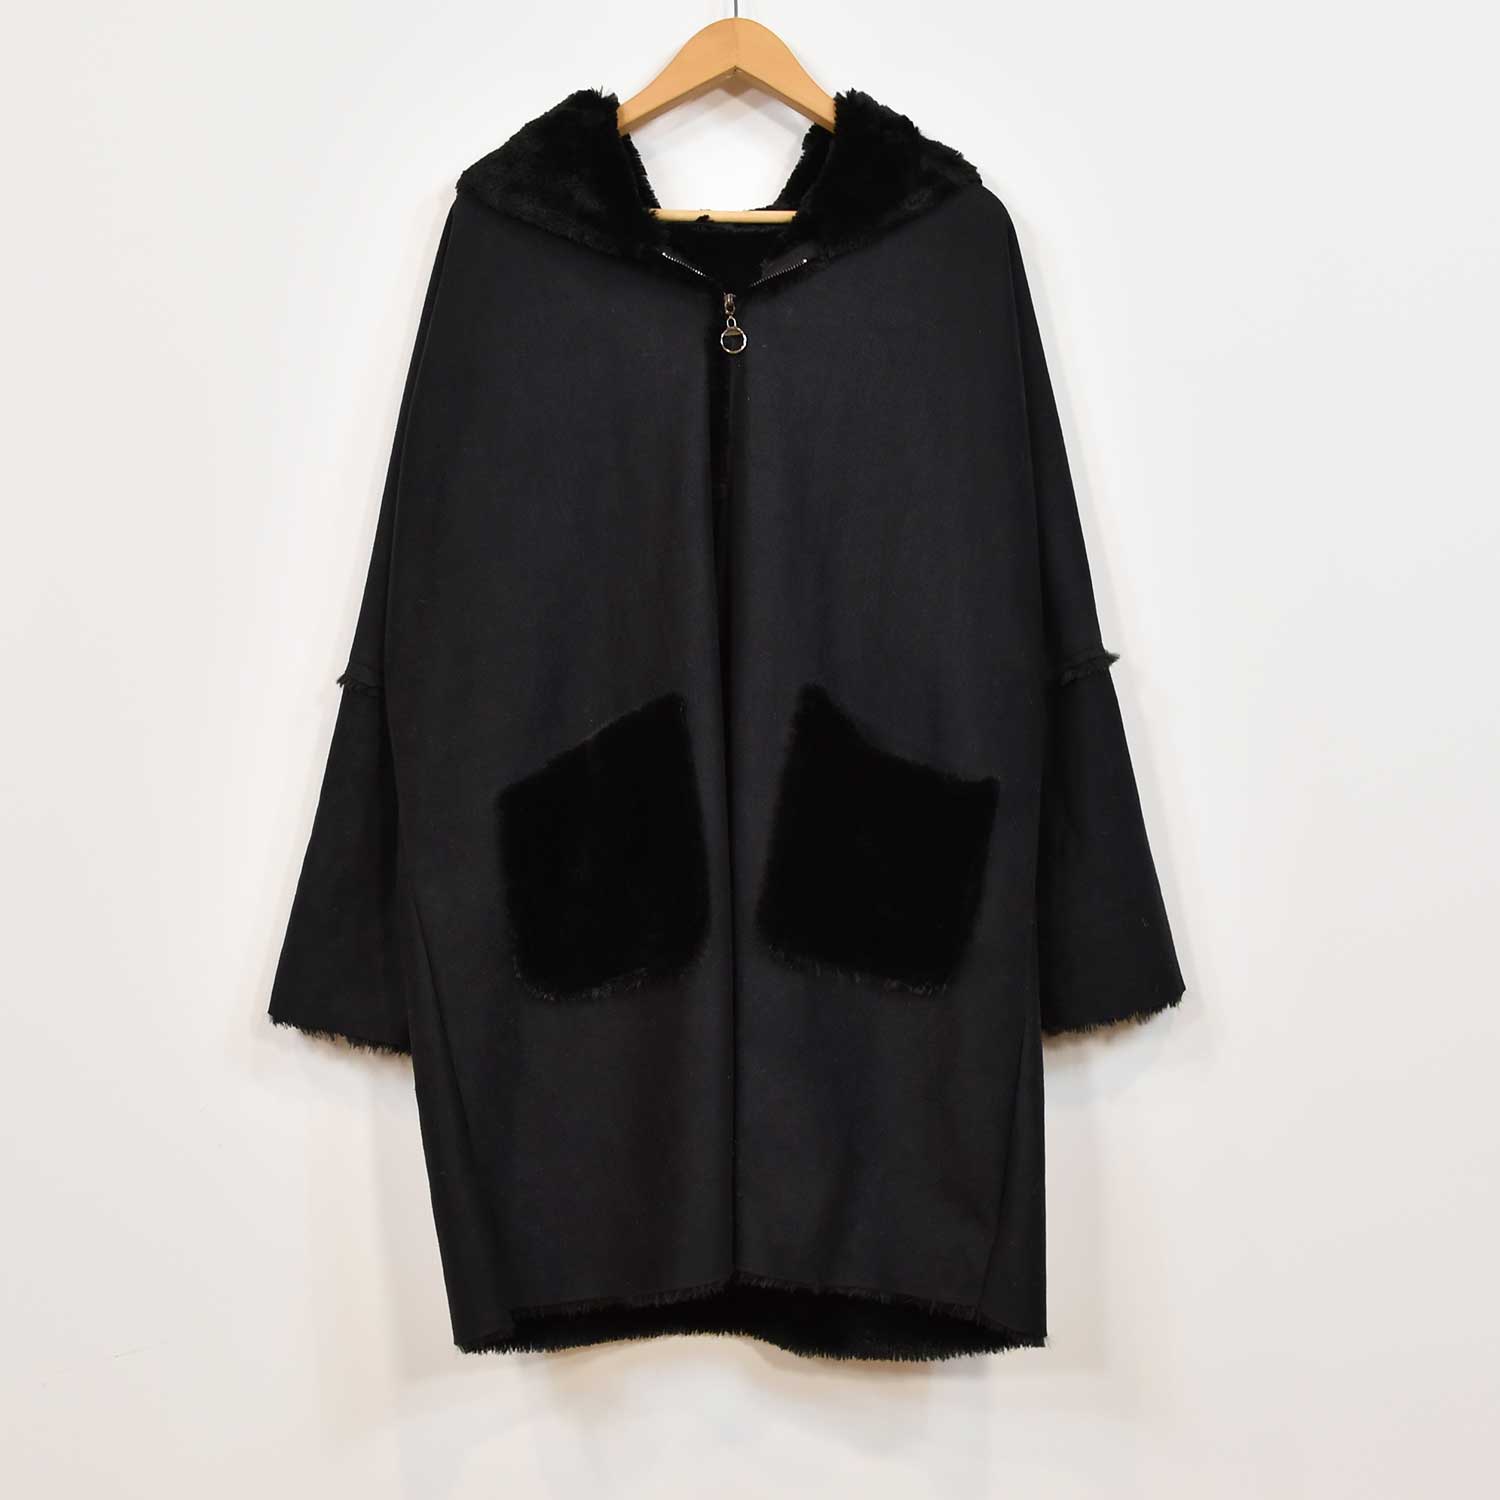 Black lined jacket